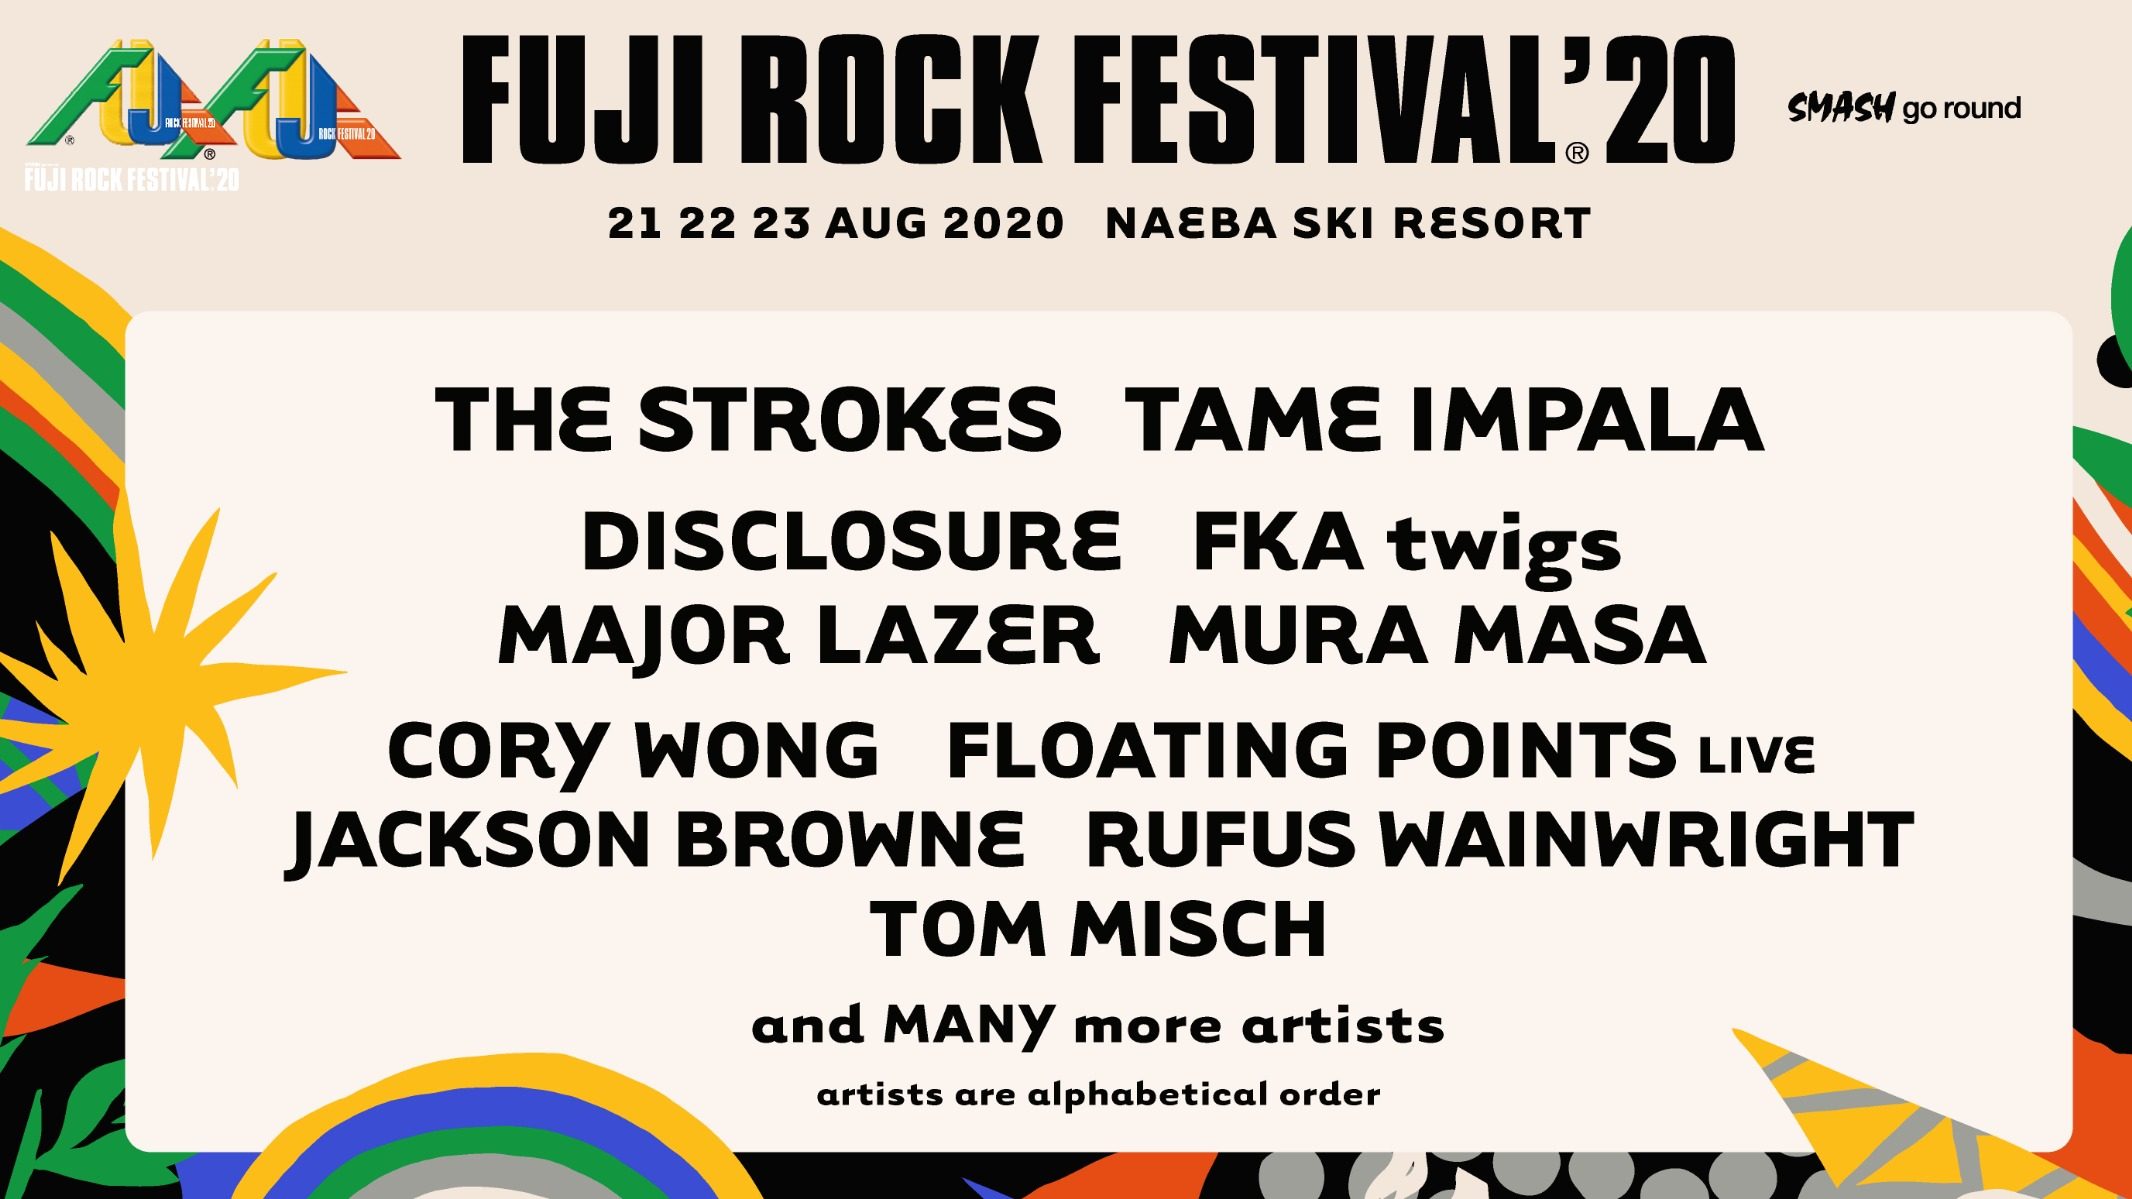 The Strokes, Tame Impala to headline Fuji Rock Festival 2020